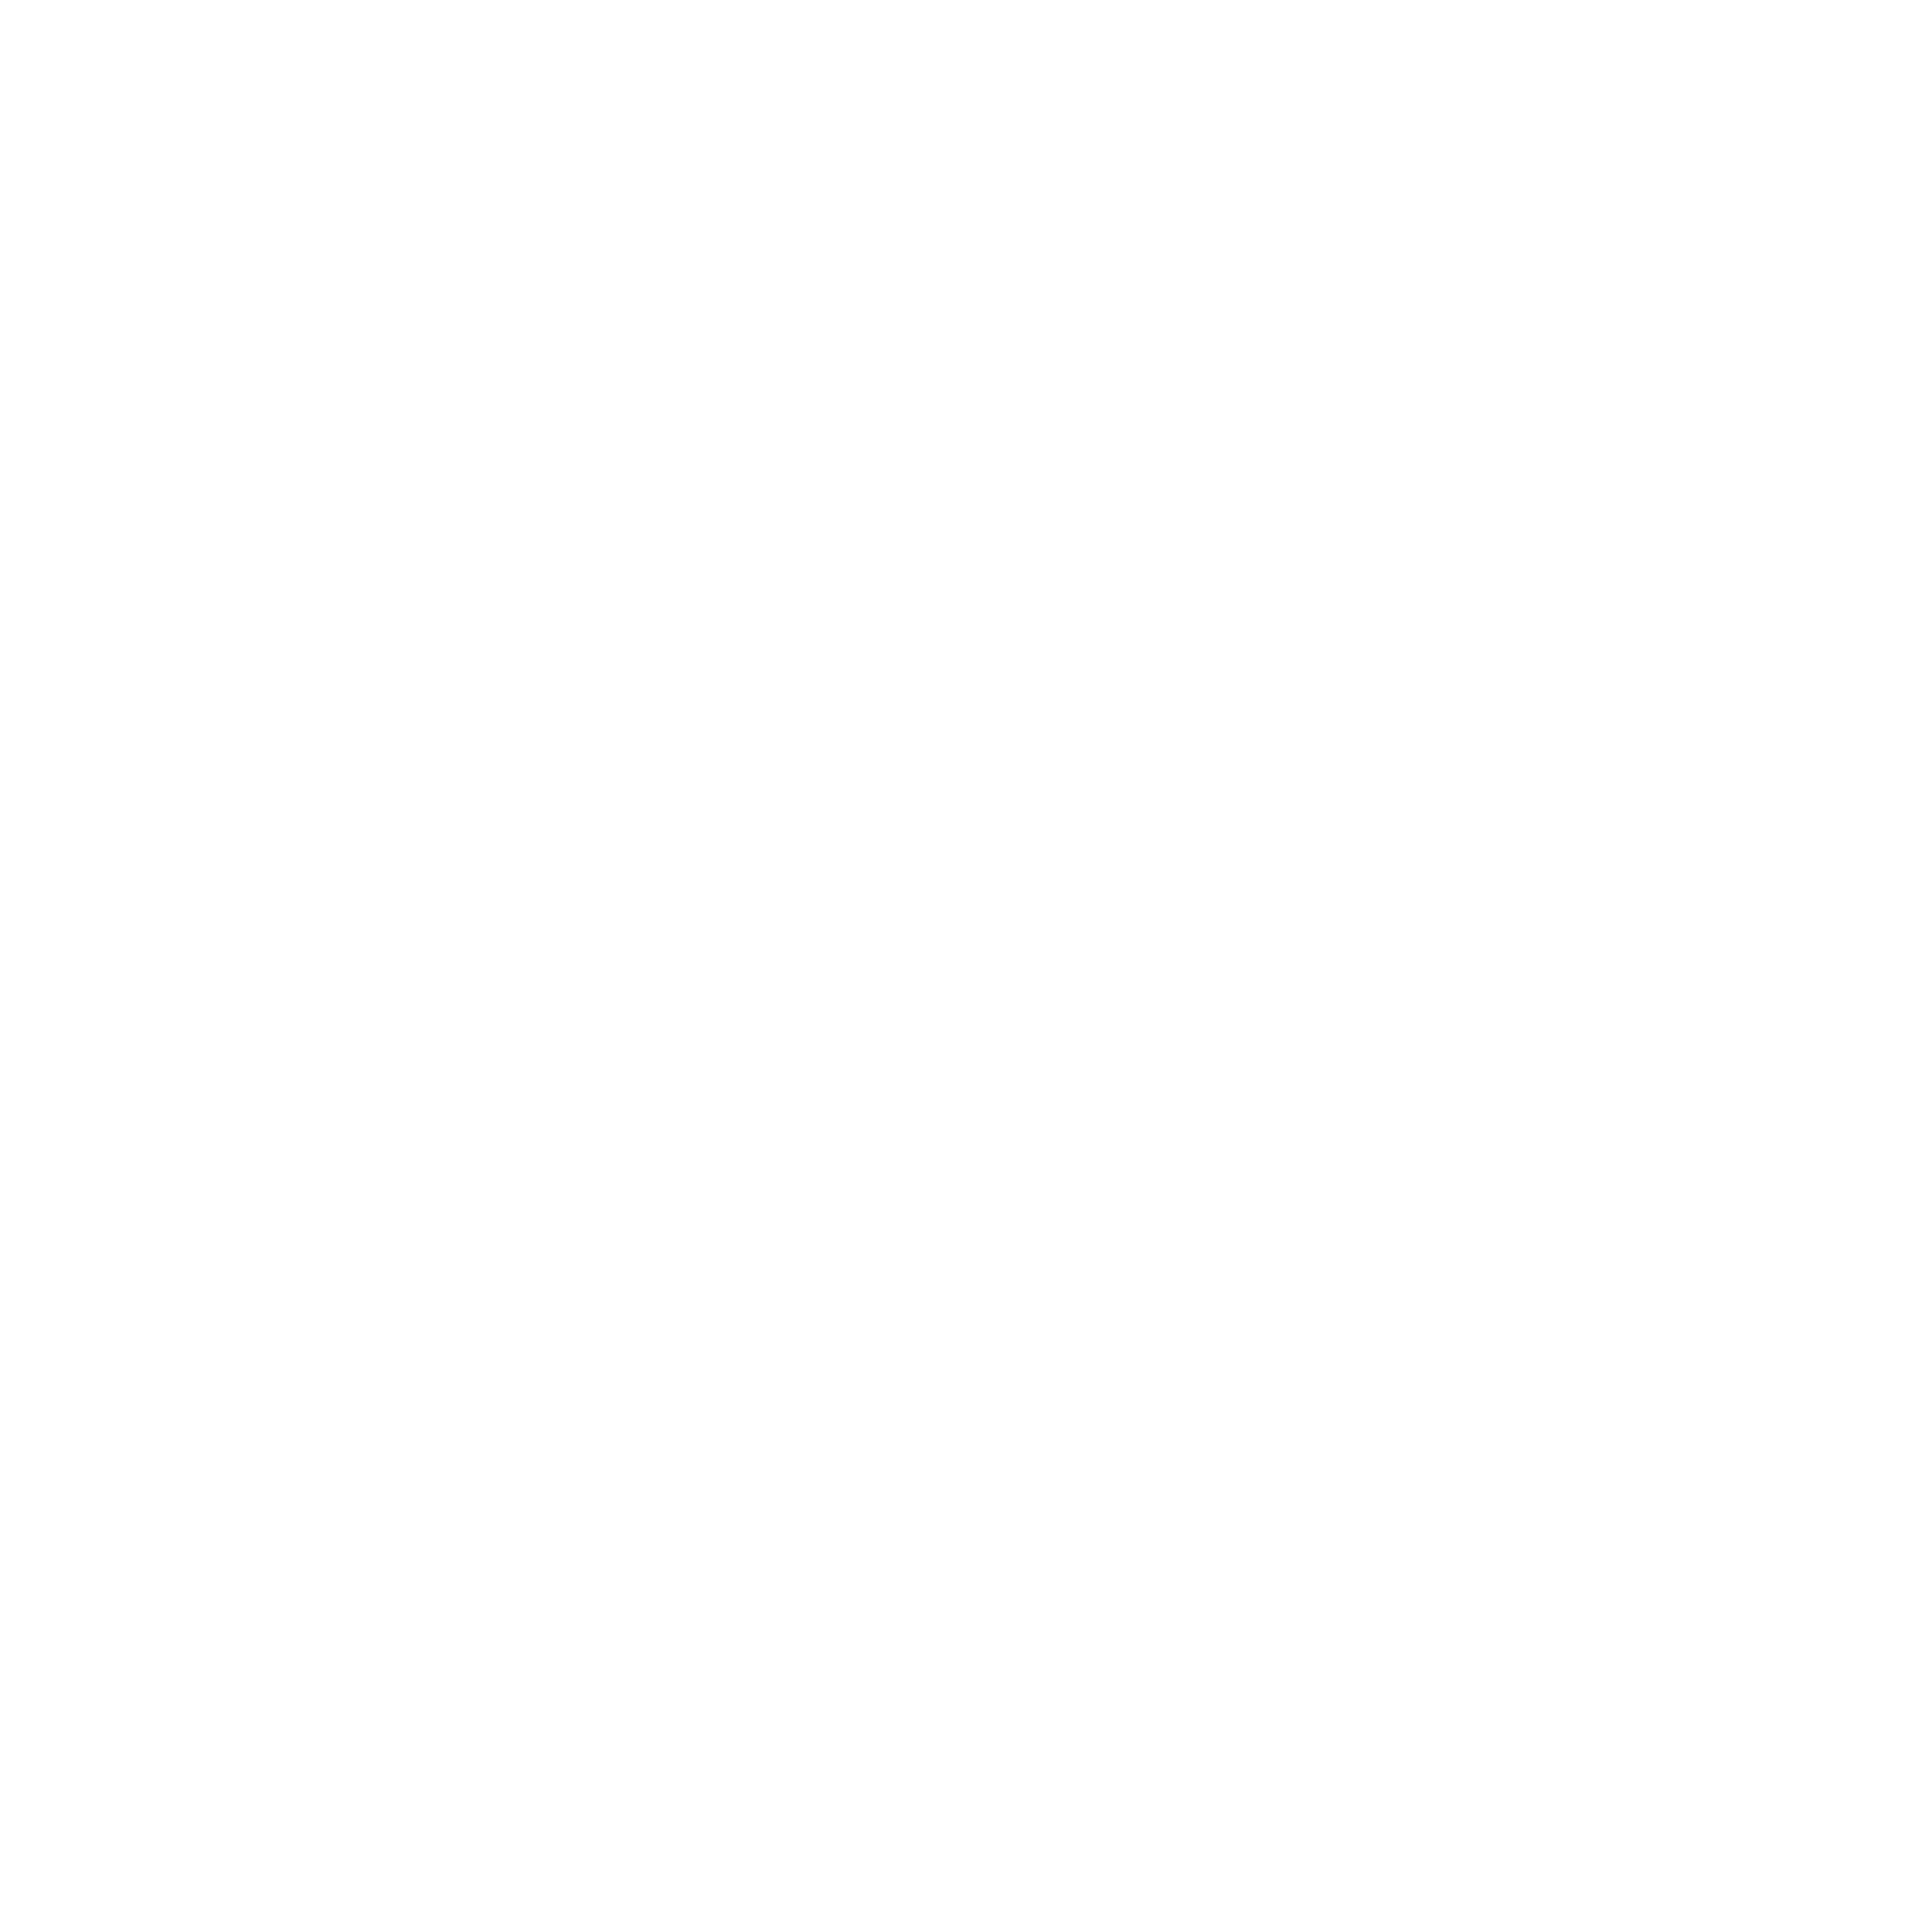 LifeStream Church